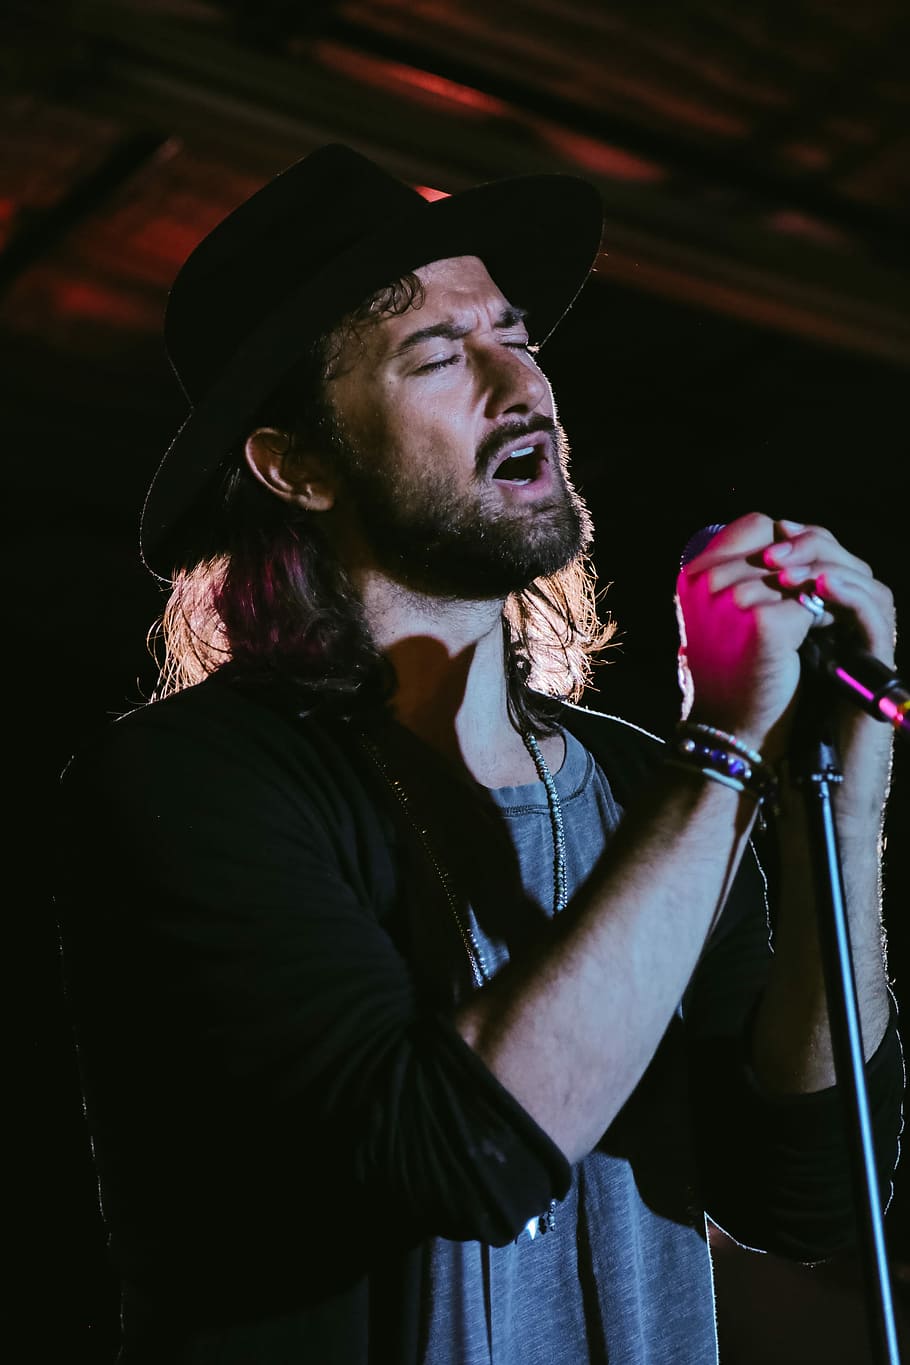 man holding black microphone, singer, music, stage, hat, beard